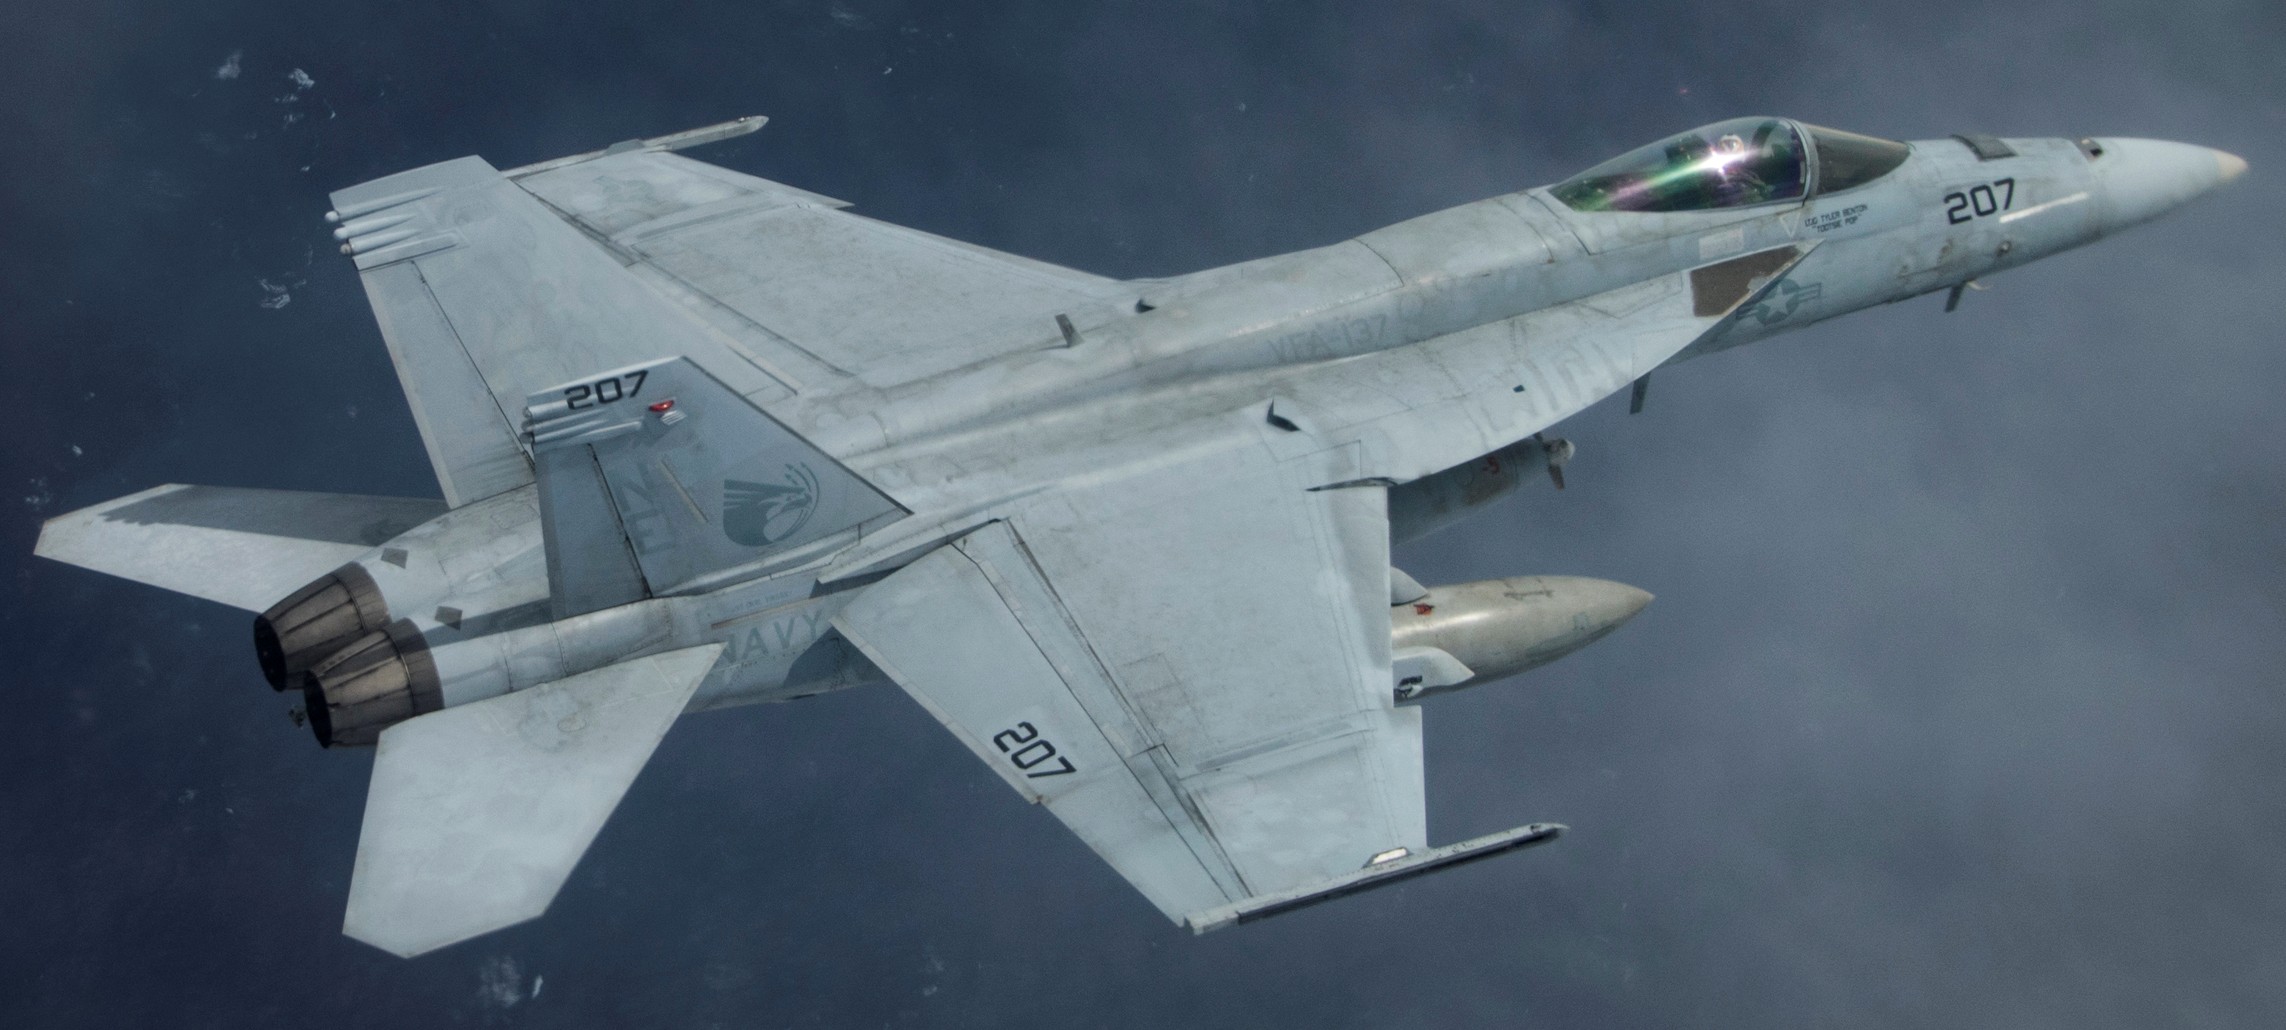 vfa-137 kestrels strike fighter squadron f/a-18e super hornet cvw-2 uss carl vinson cvn-70 2017 12